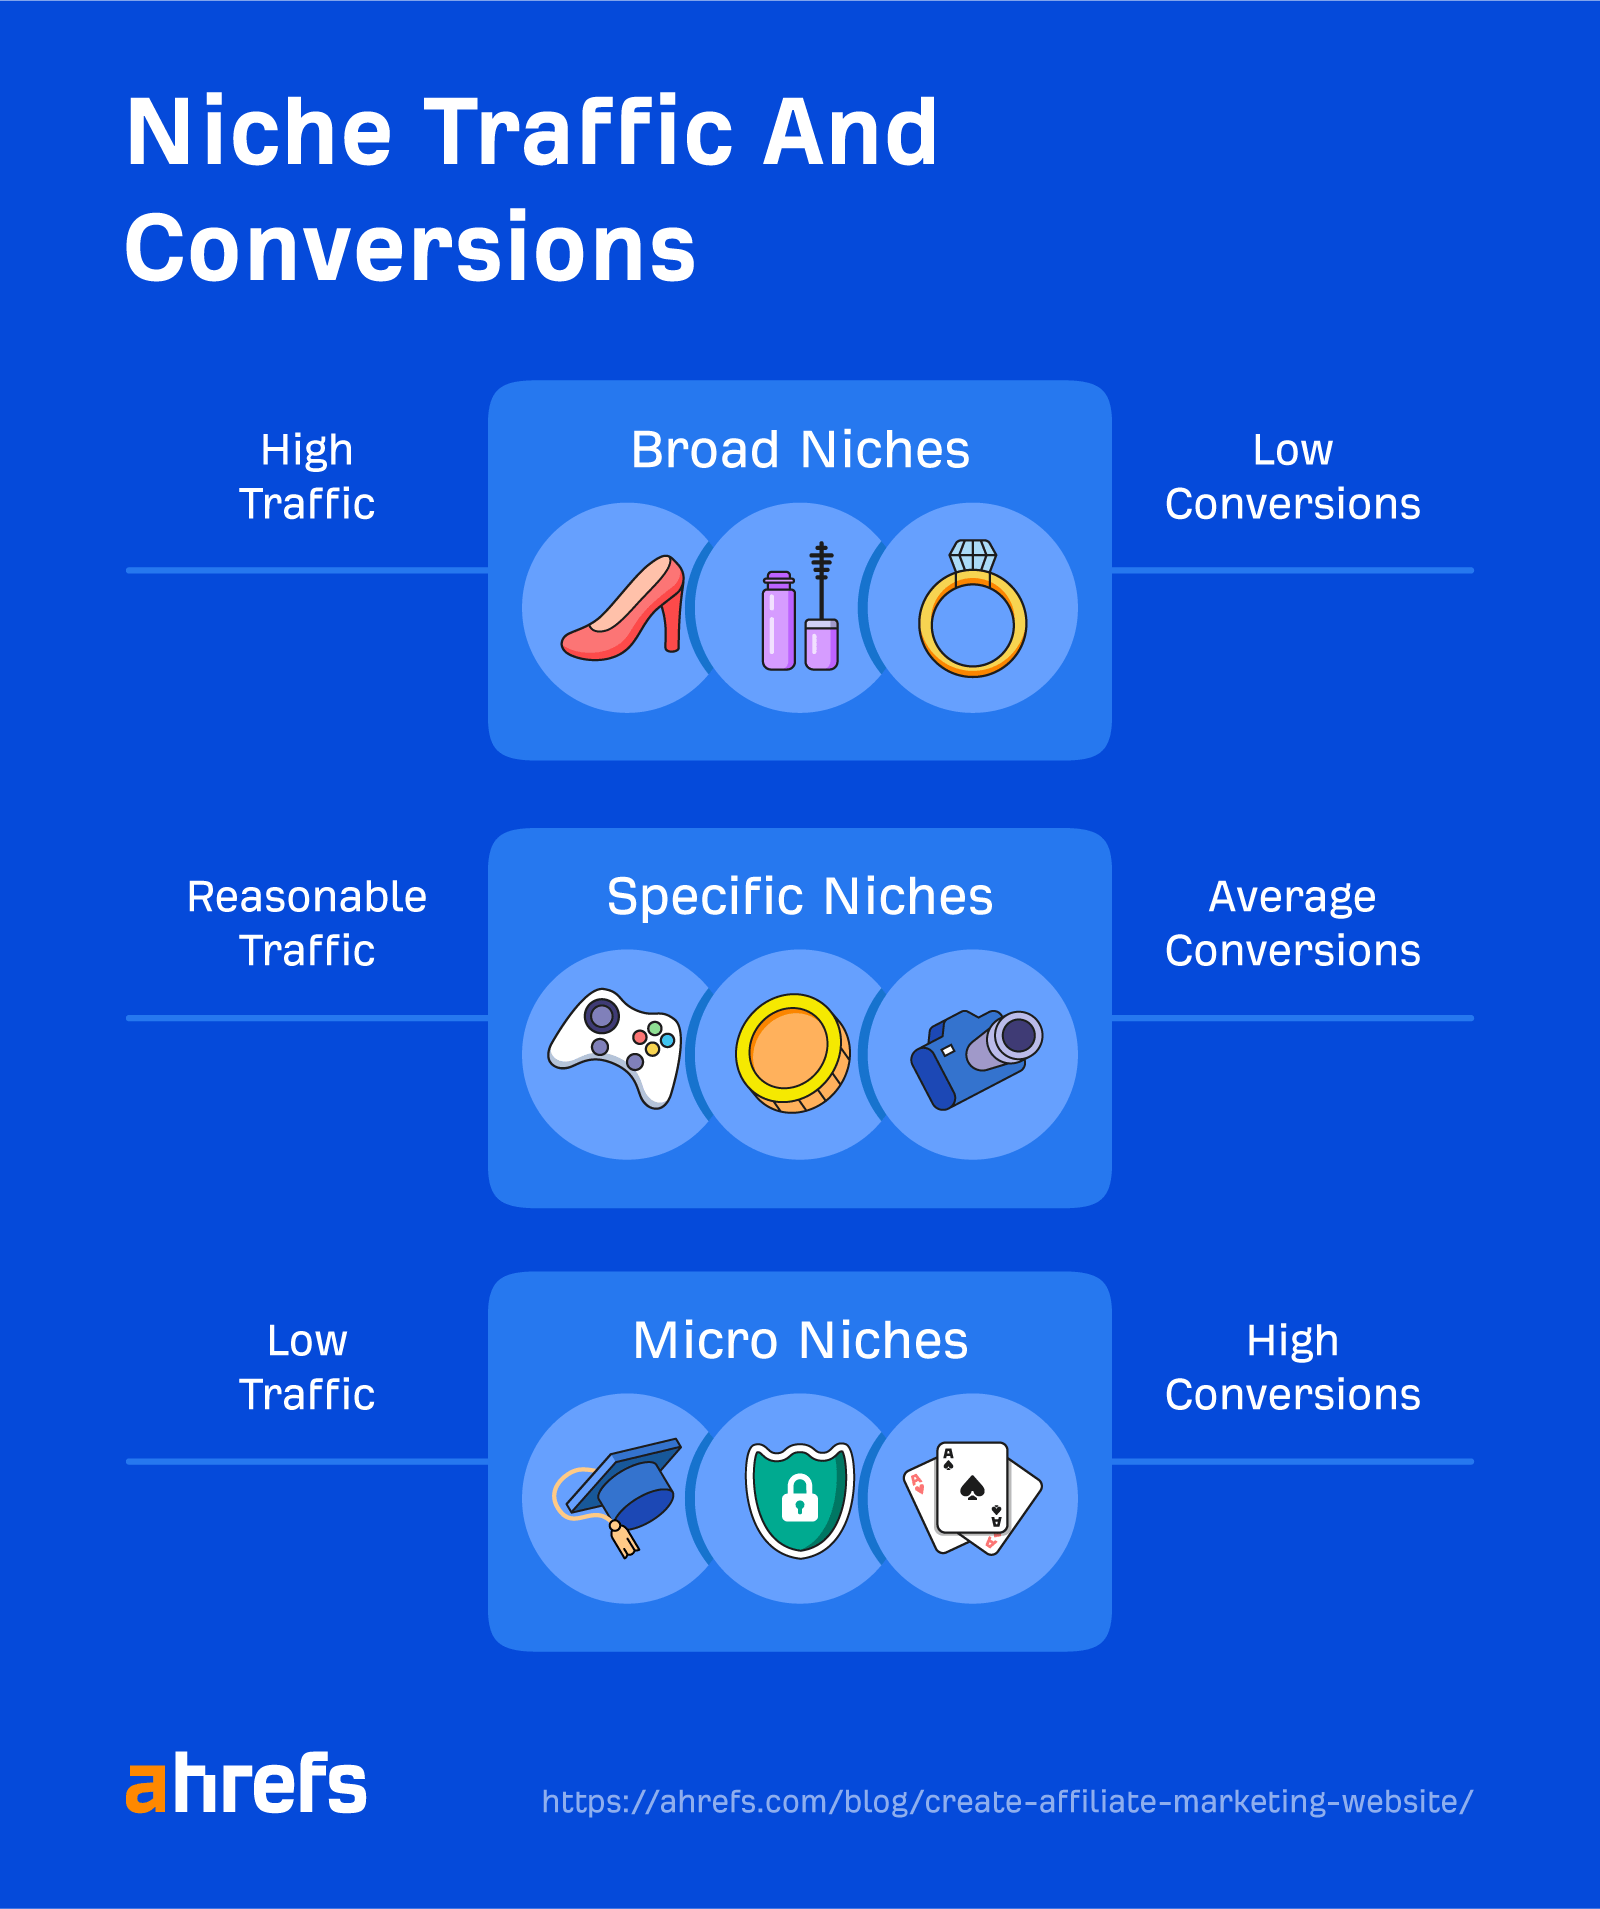 Niche traffic and conversions